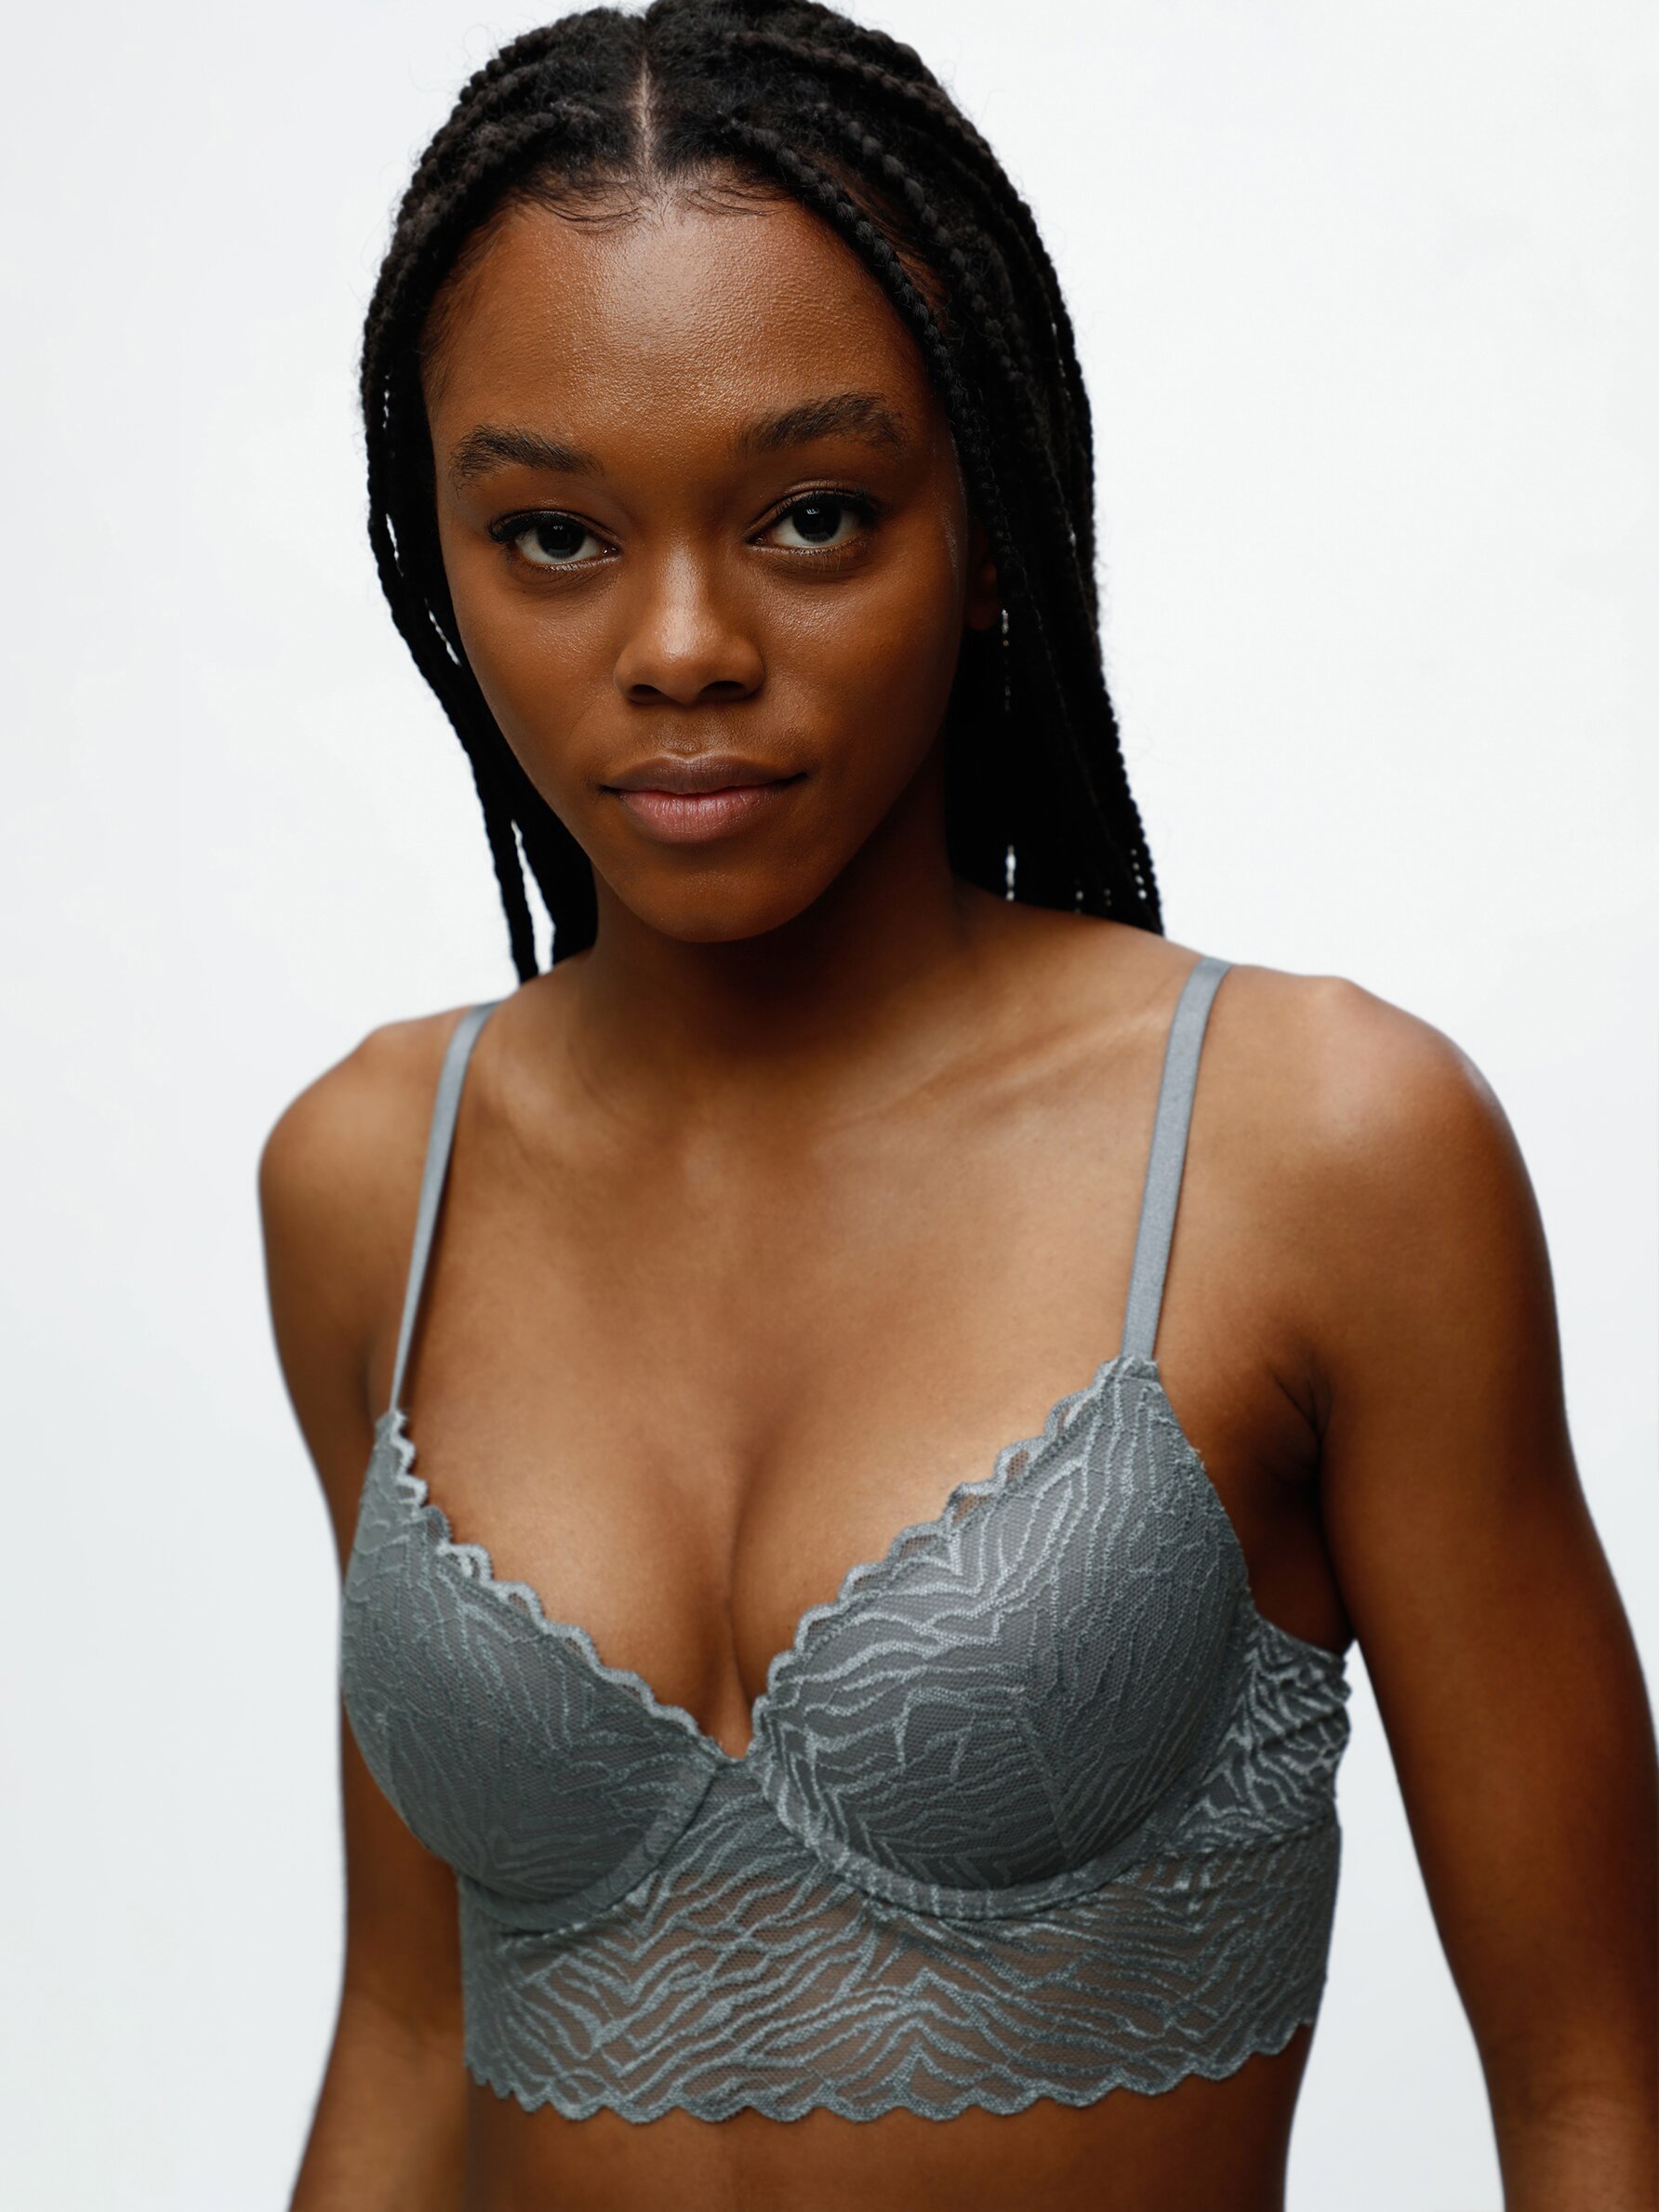 Buy Push-up lace bra Online in Dubai & the UAE